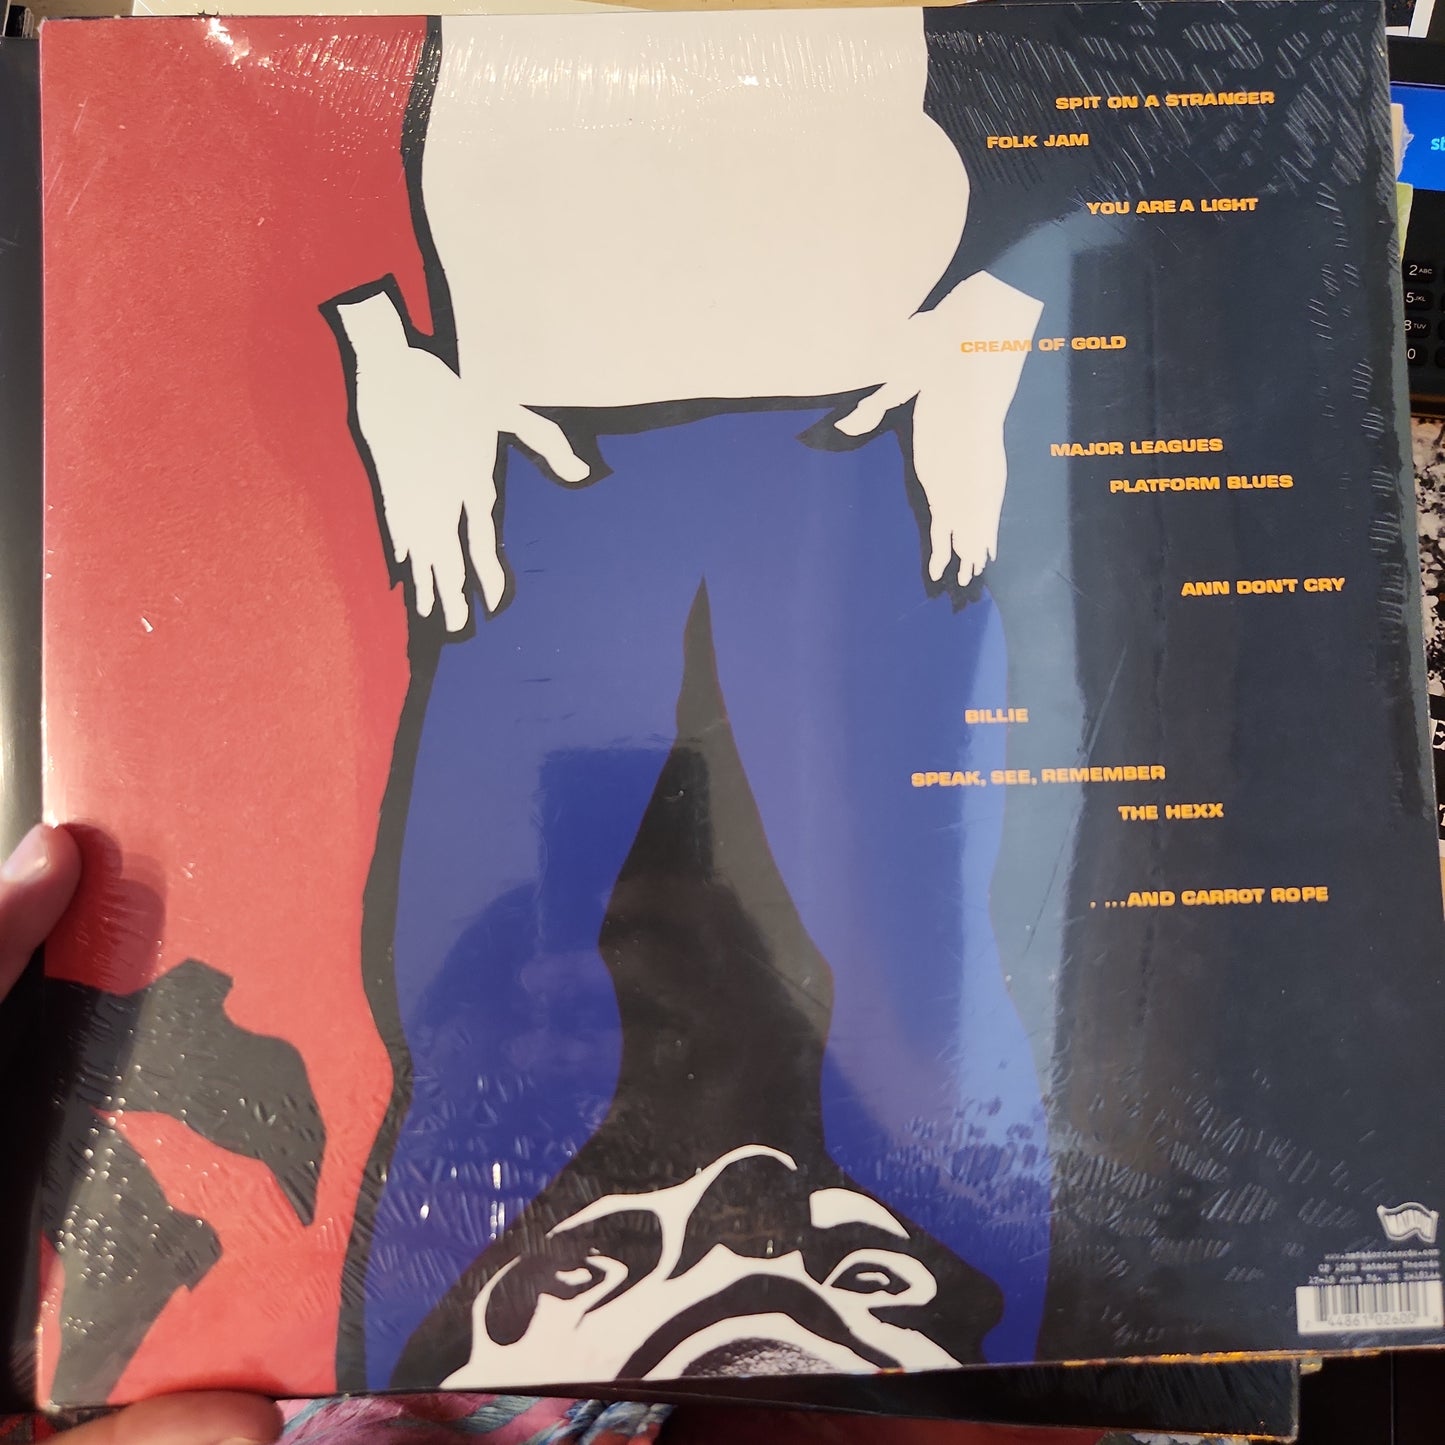 Pavement - Terror Twilight - Vinyl LP